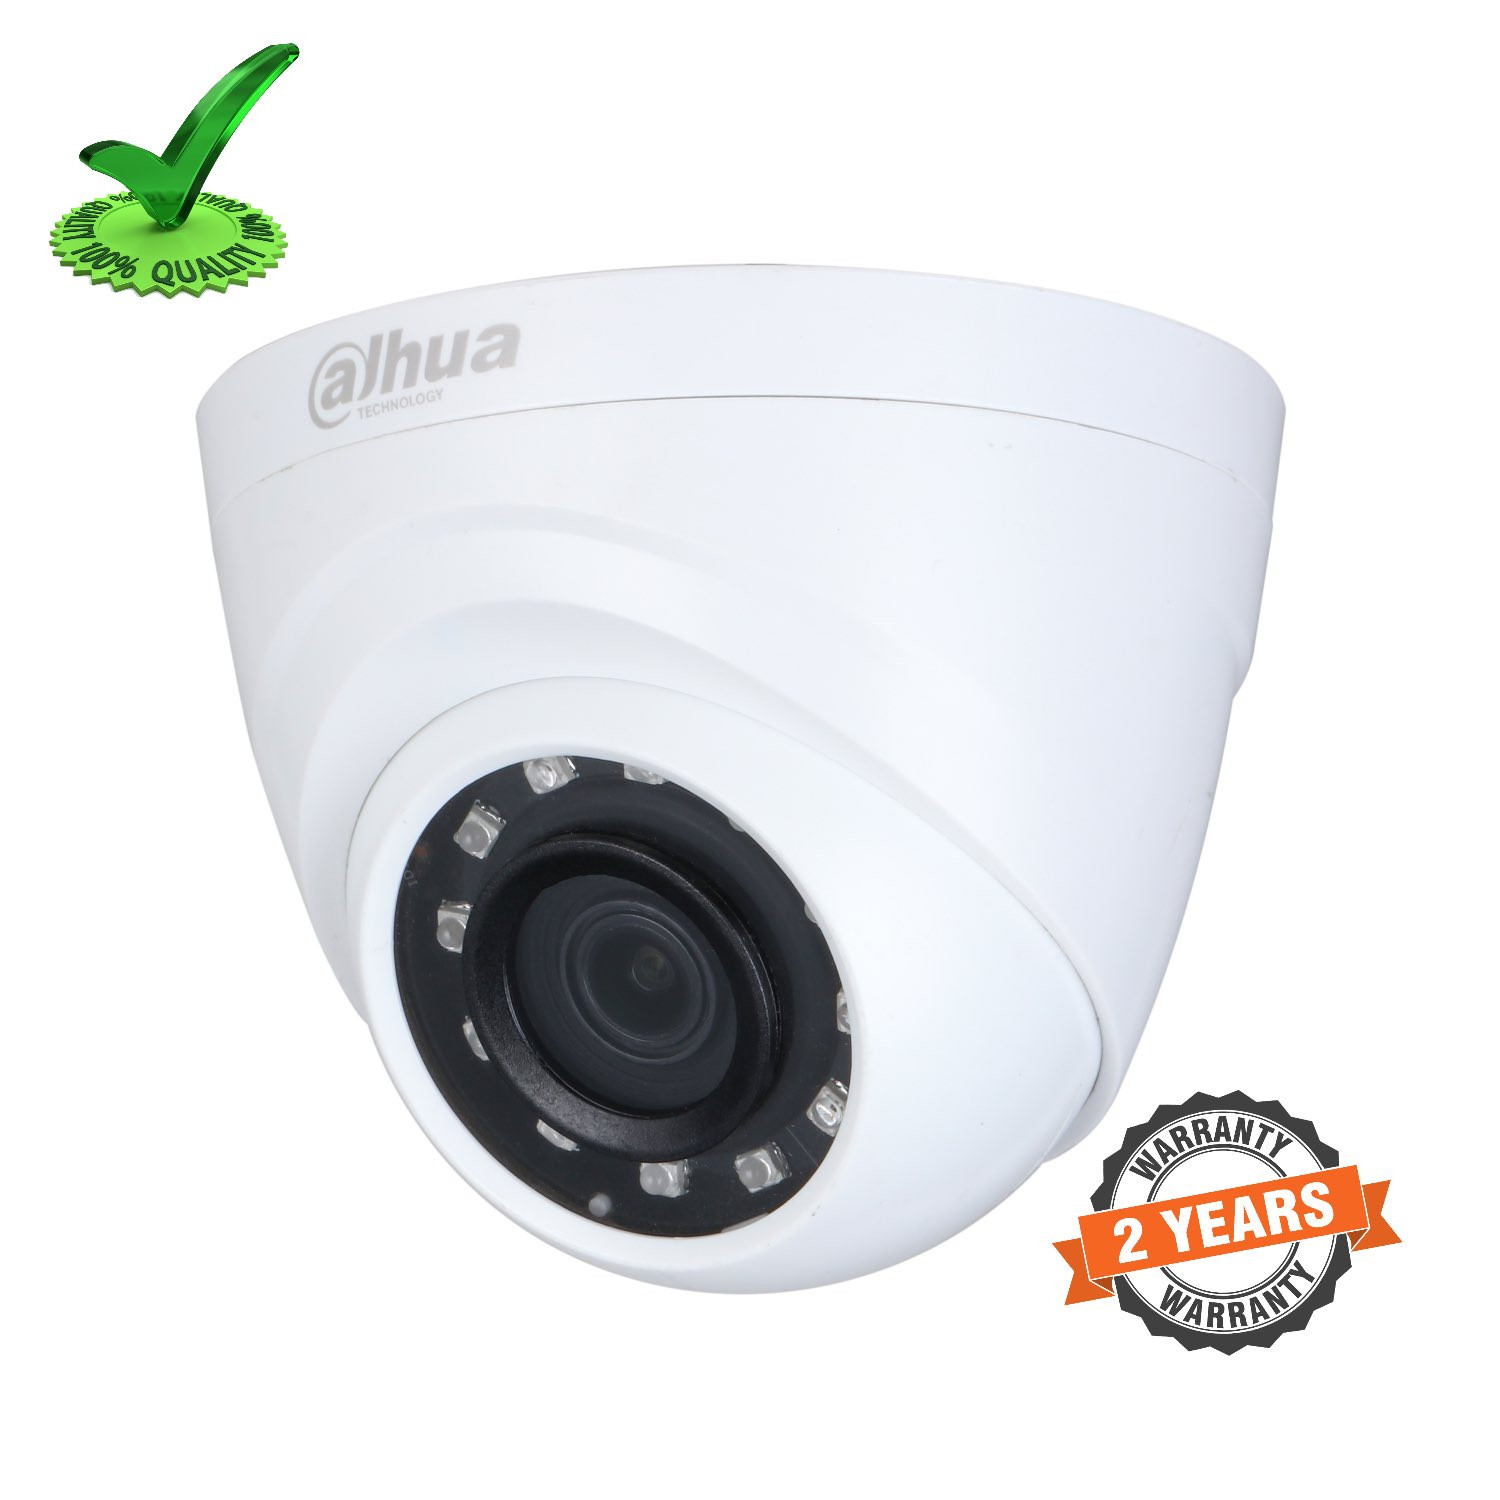 Dahua DH-HAC-HDW1400RP 4MP CCTV IR Eyeball Camera